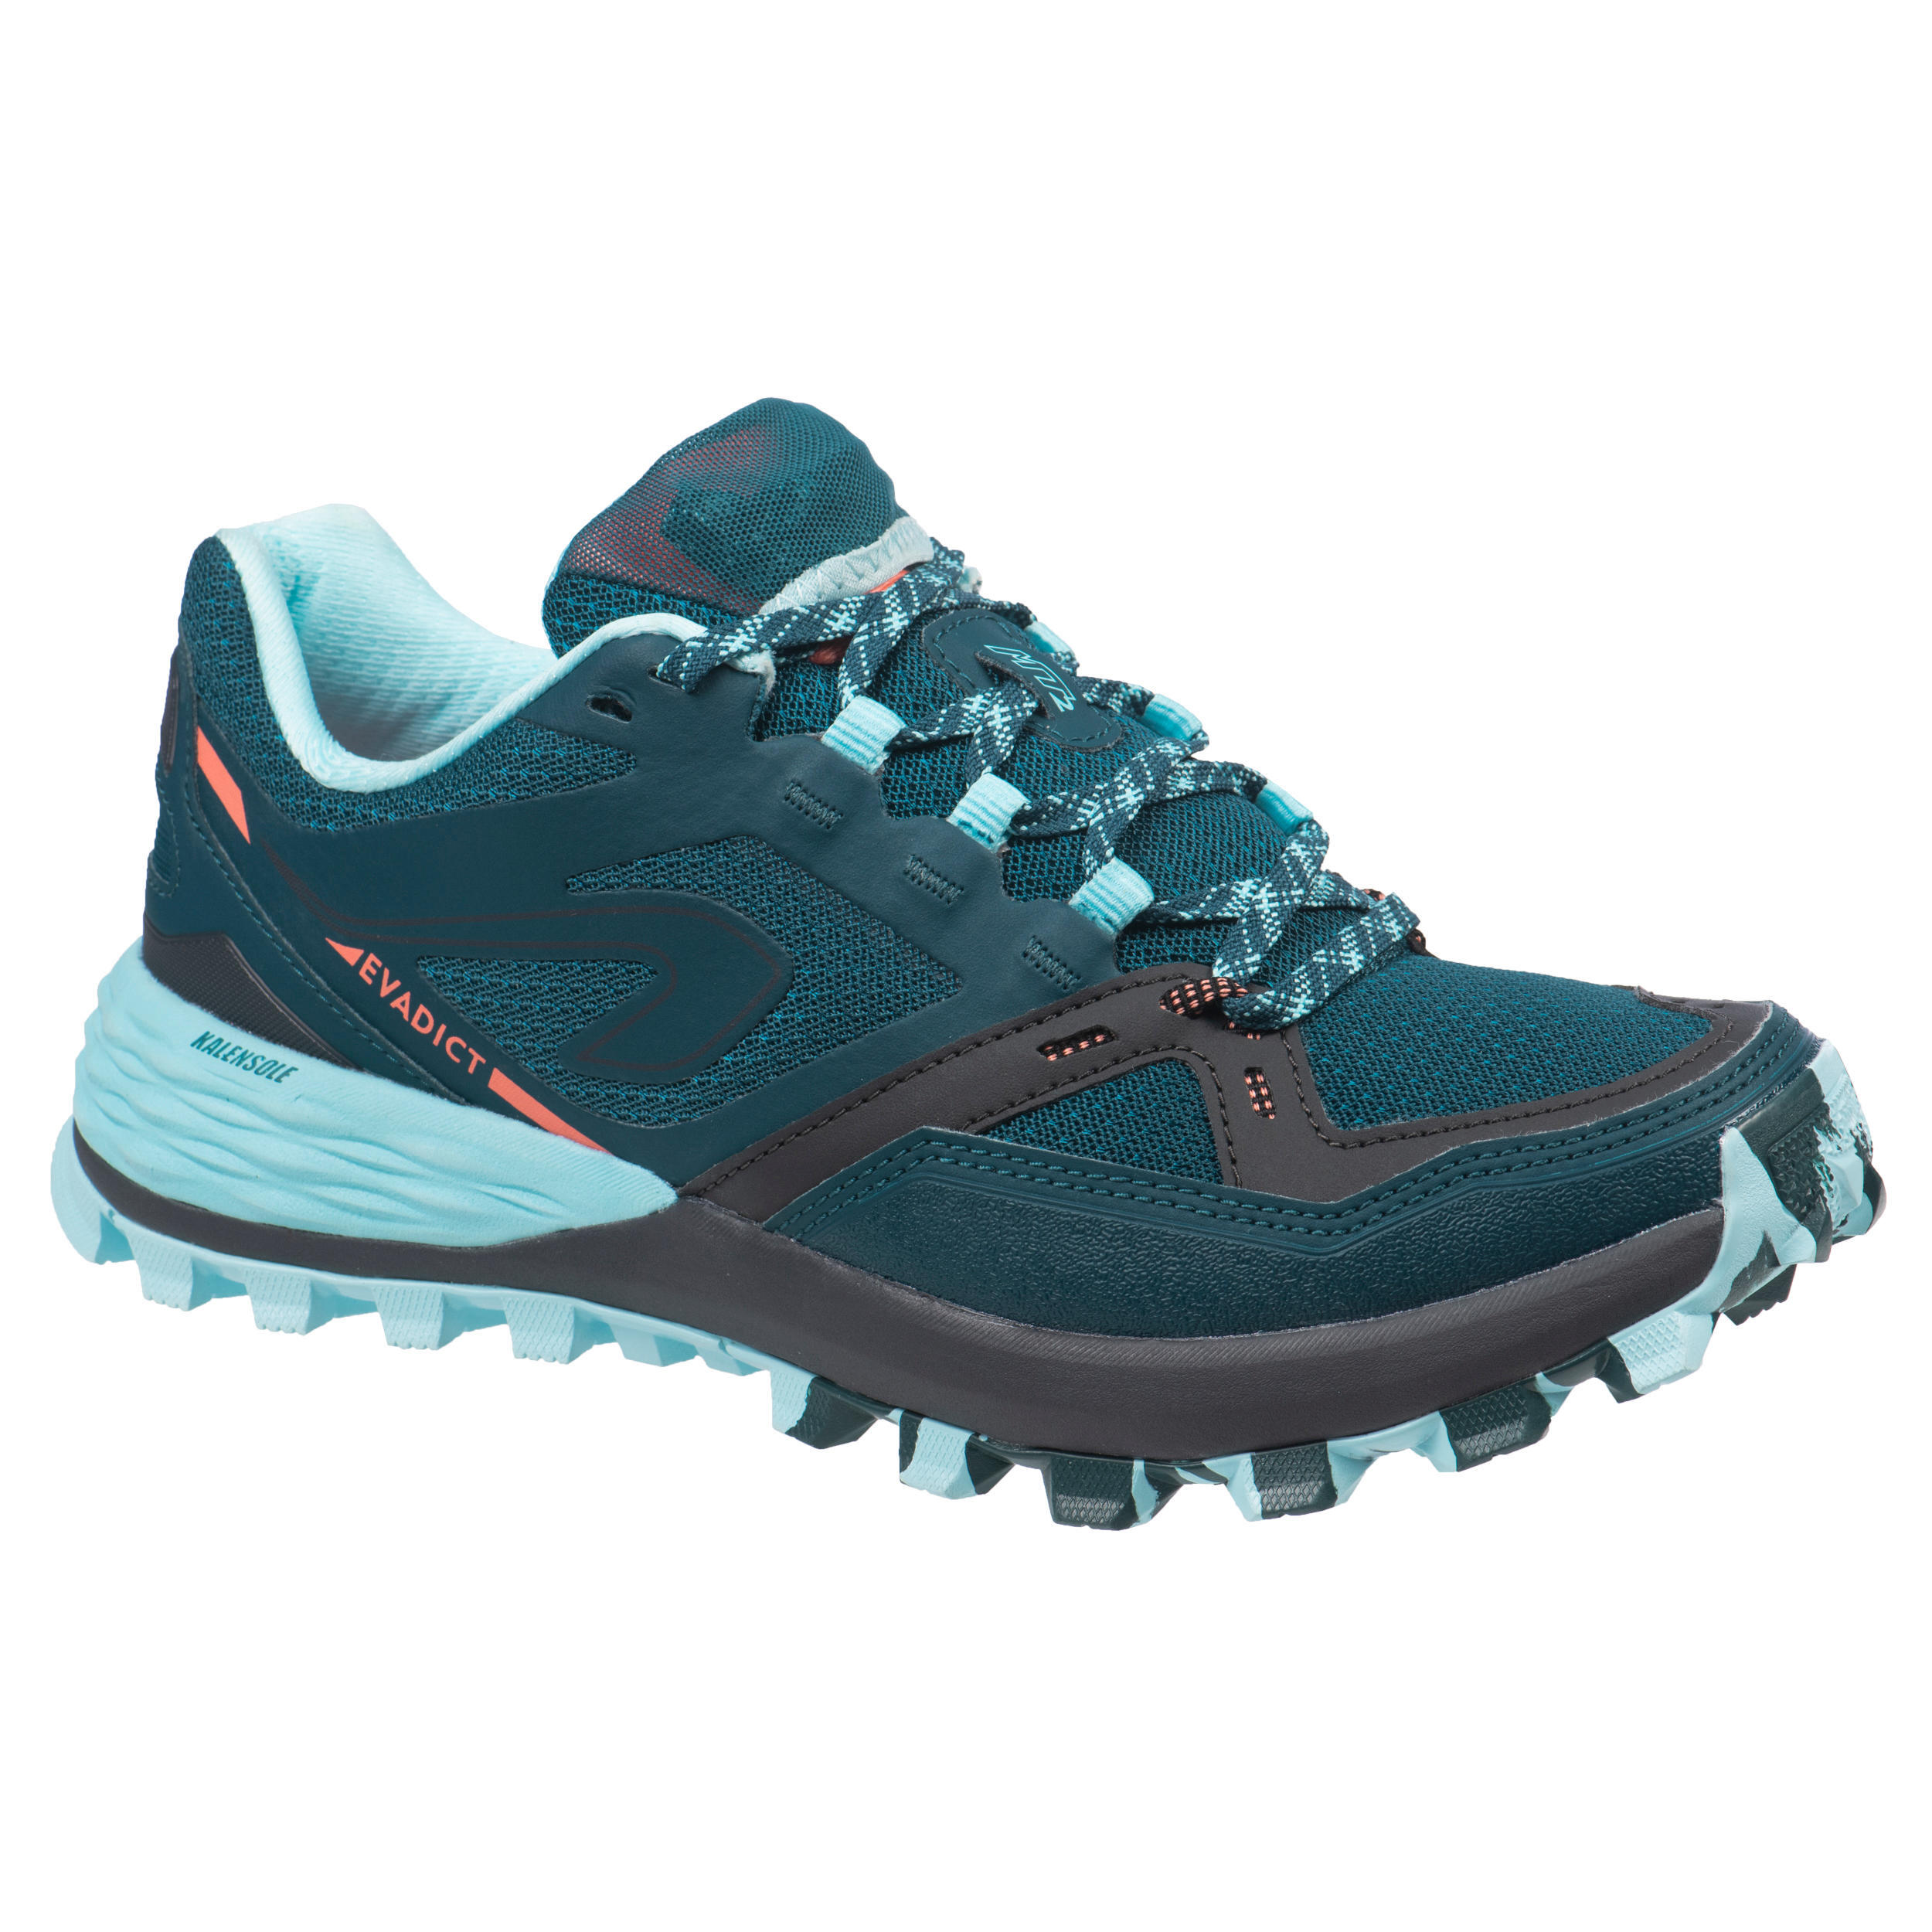 MT 2 Women's Trail Running Shoes - Dark Blue/Light Blue 2/8